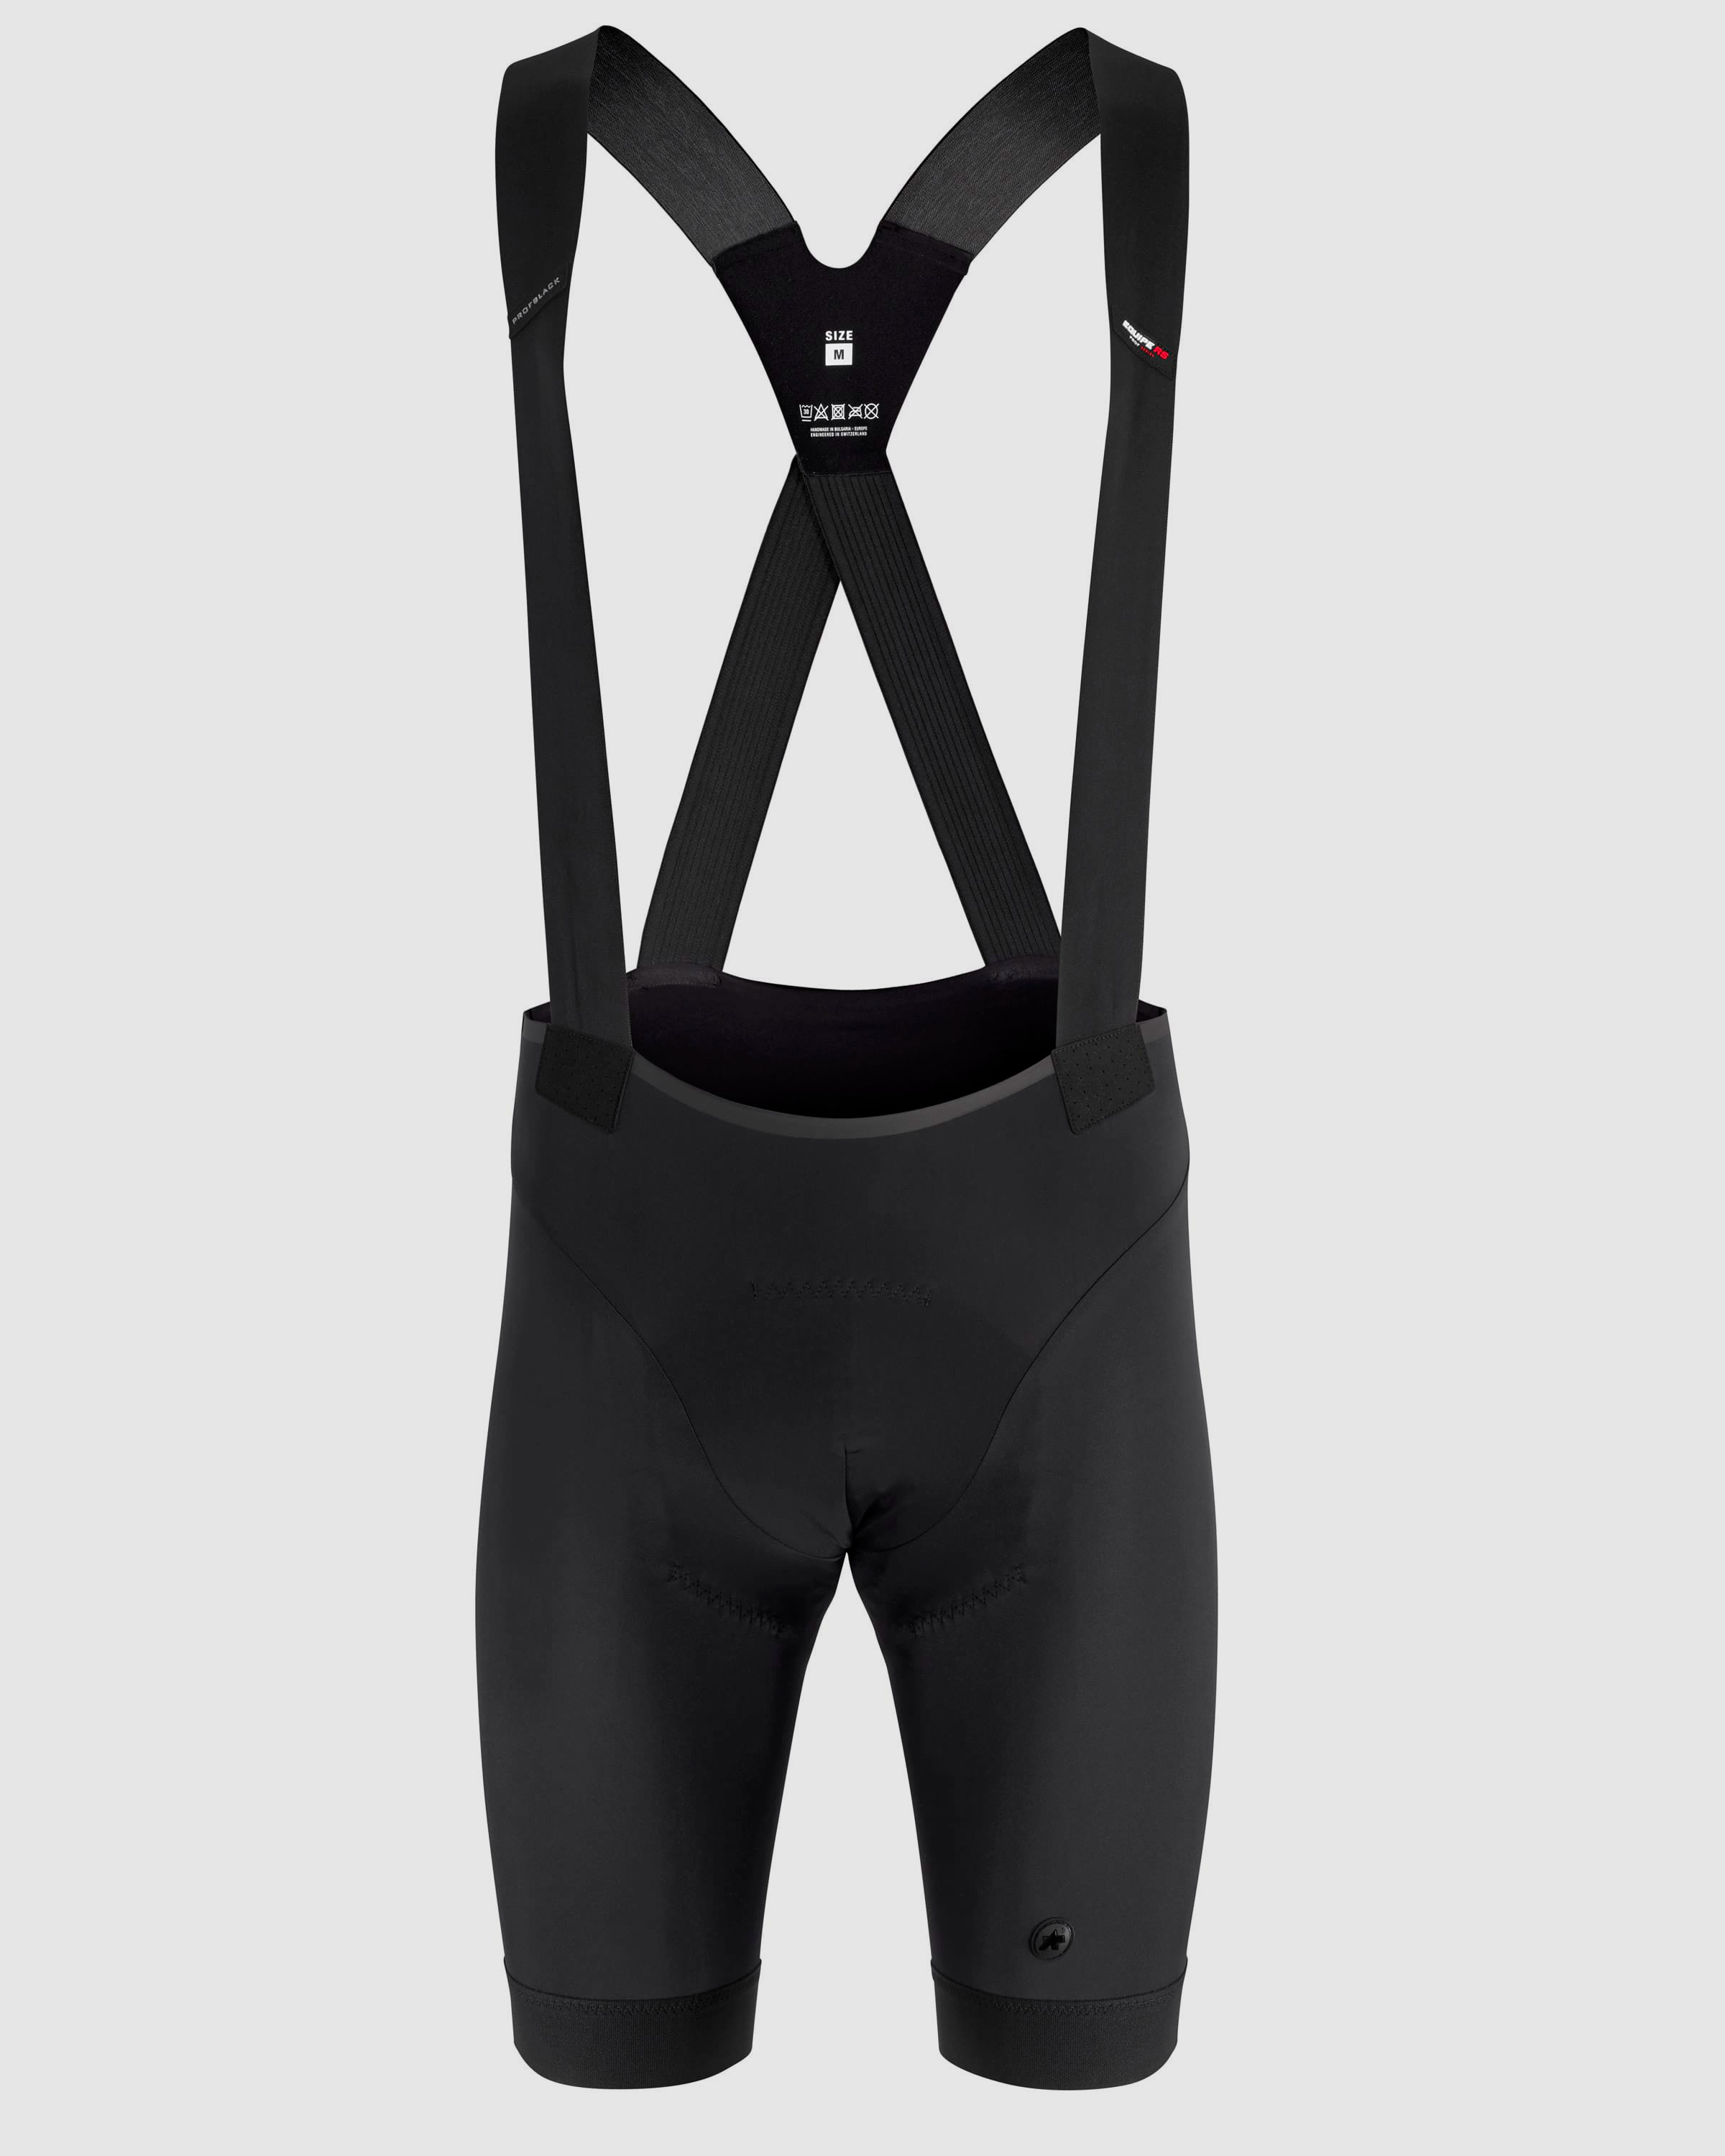 EQUIPE RS Bib Shorts S9, profBlack » ASSOS Of Switzerland